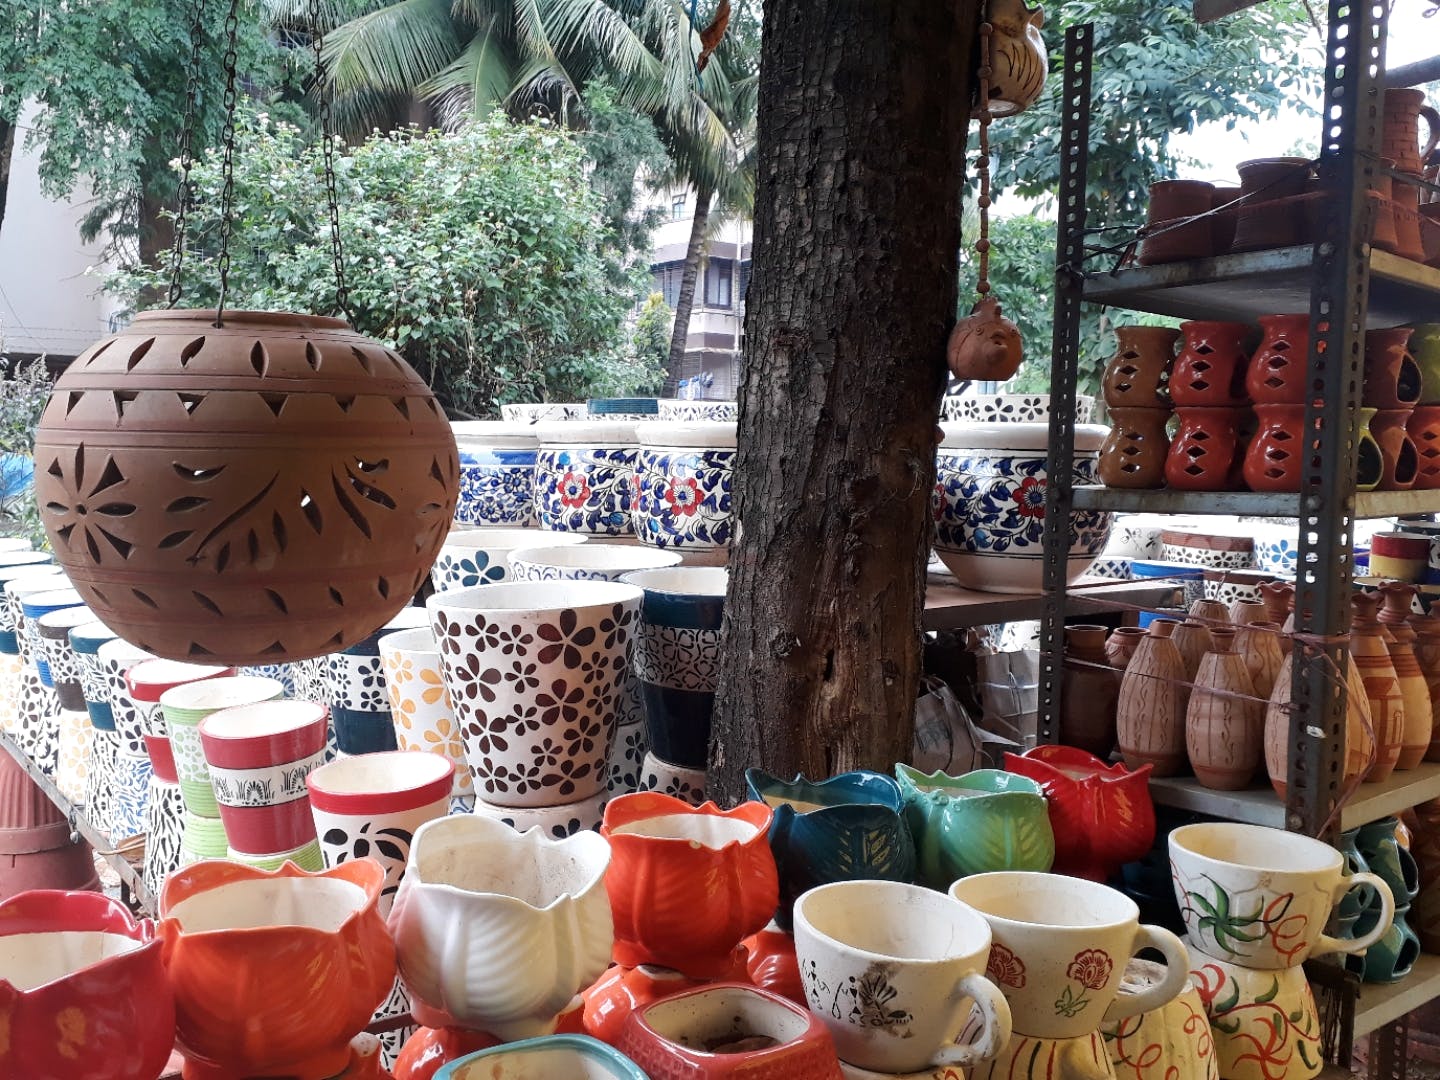 Pottery,Ceramic,Tree,Tourism,Market,City,Art